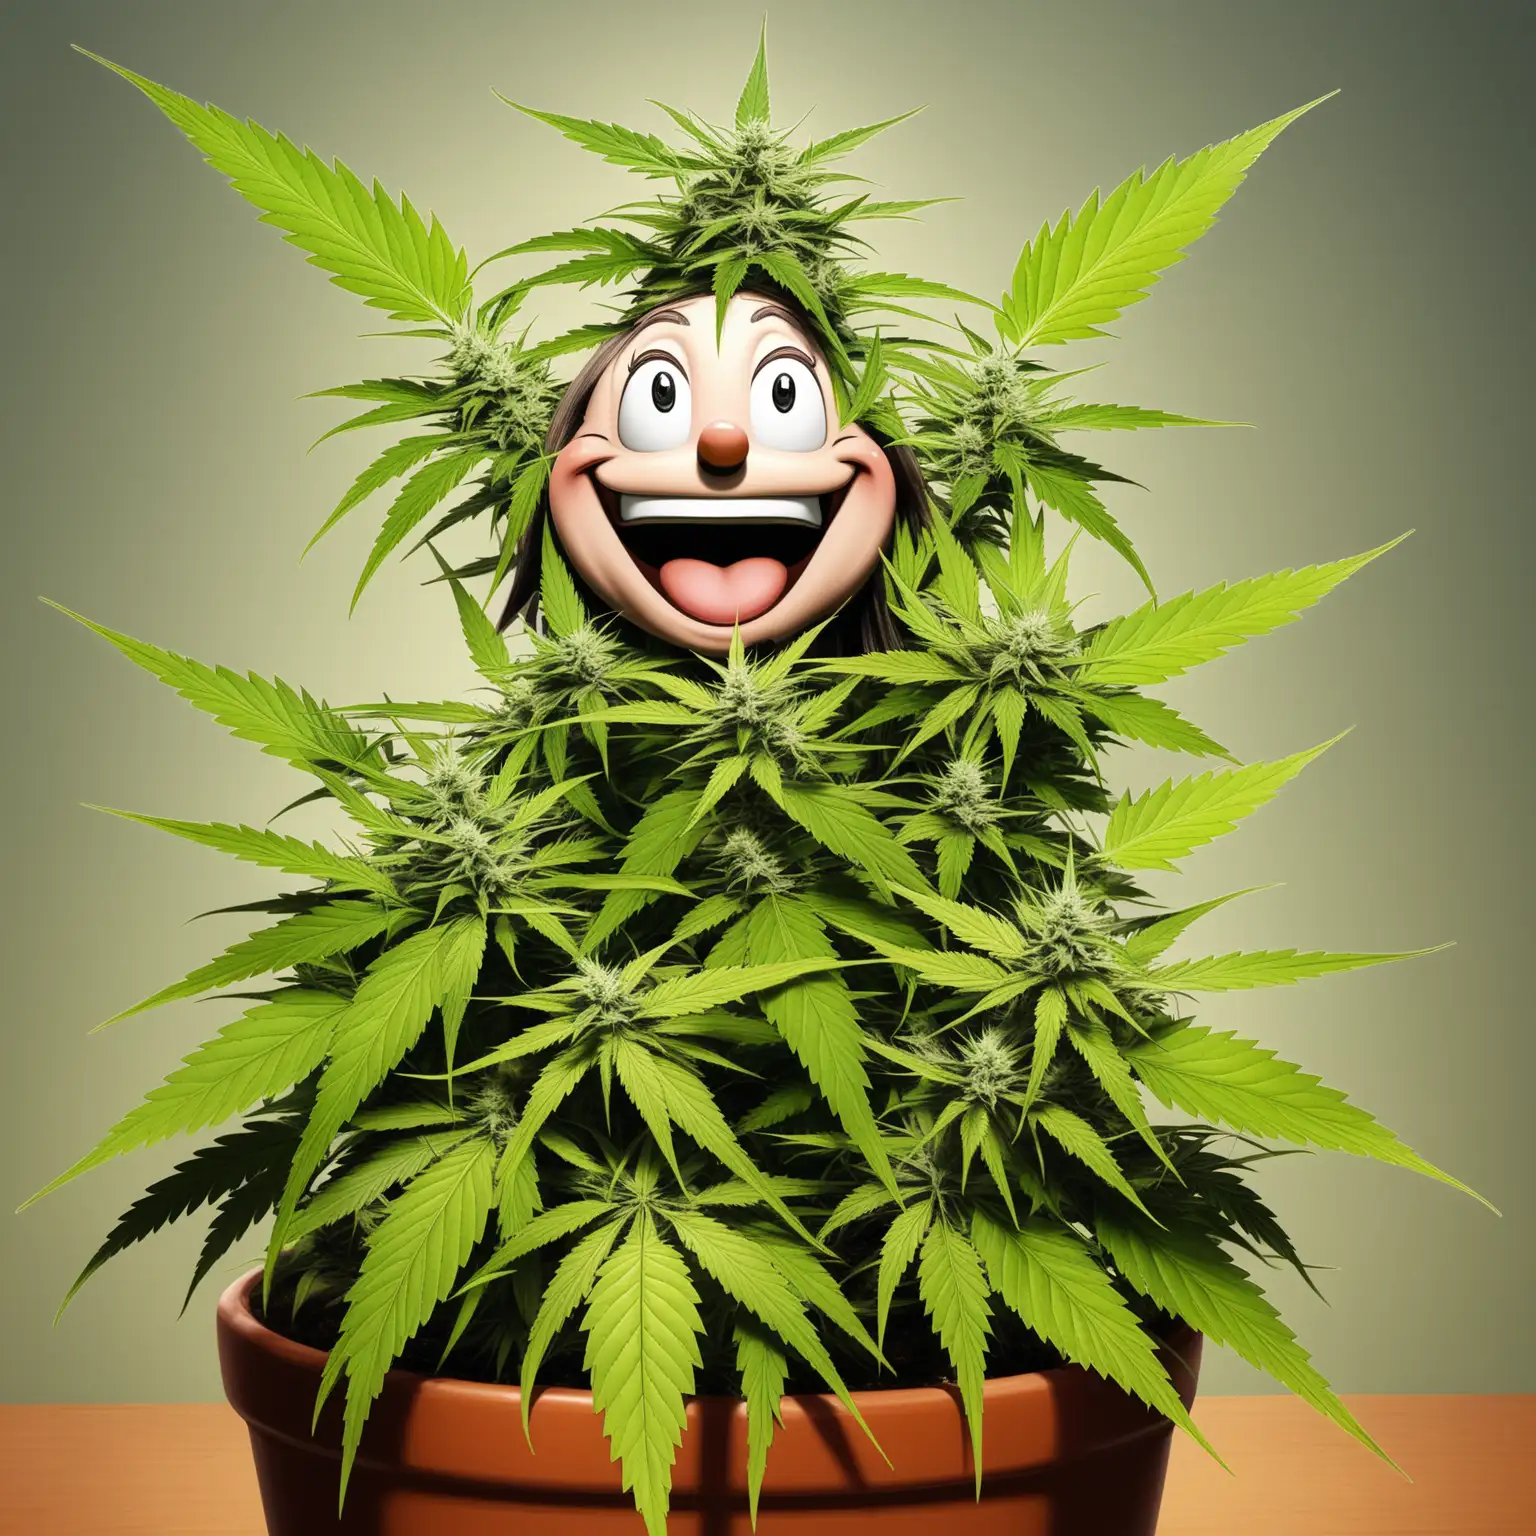 A goofy happy cutie maryjane Marijuana plant